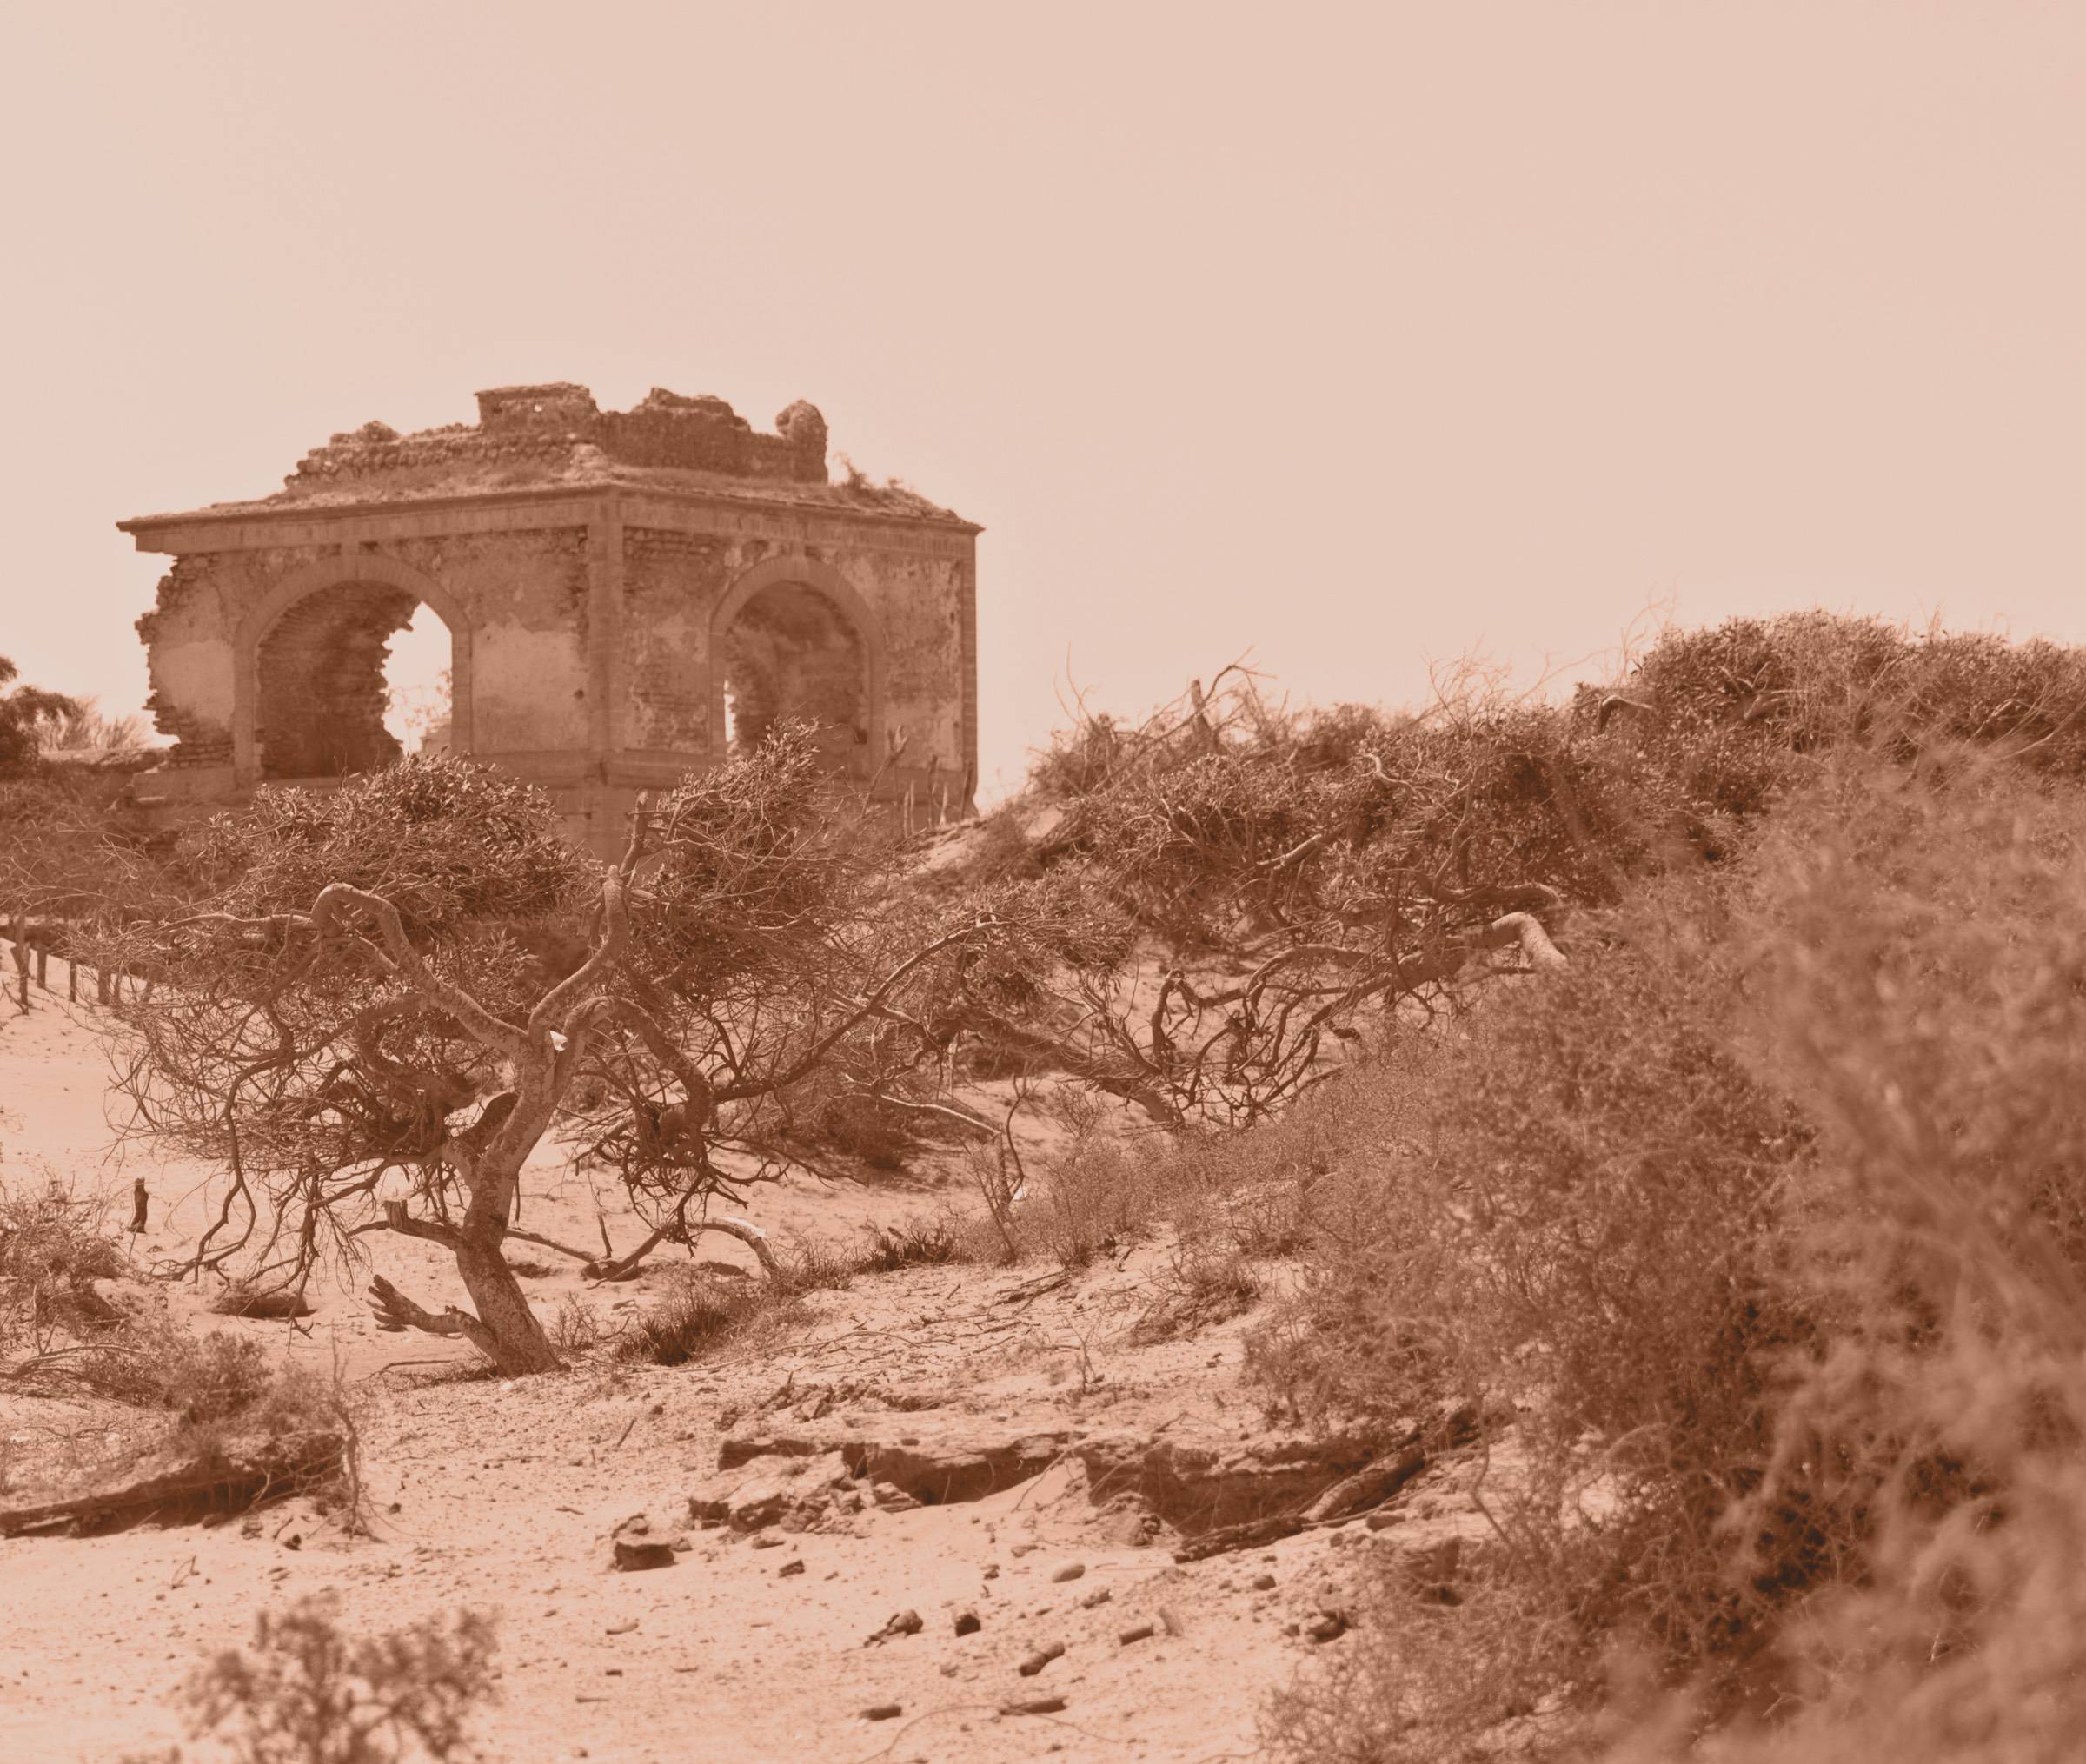 Ranch de Diabat is located in Essaouira, Morocco.